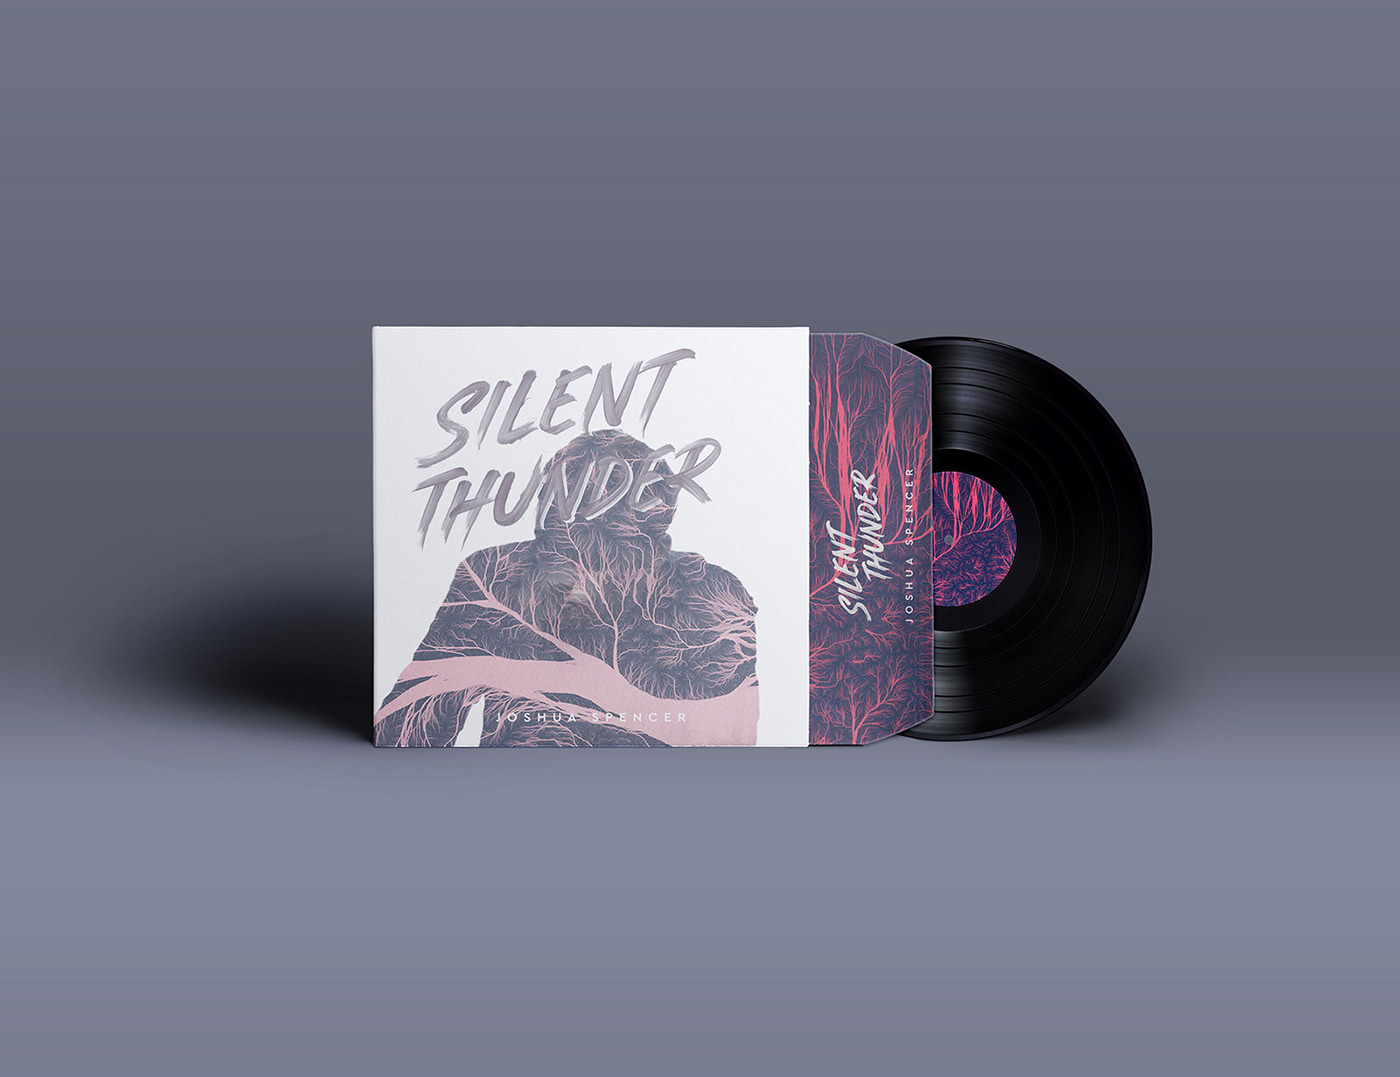 silent thunder Album cover music typography   grunge double exposure rock album cover